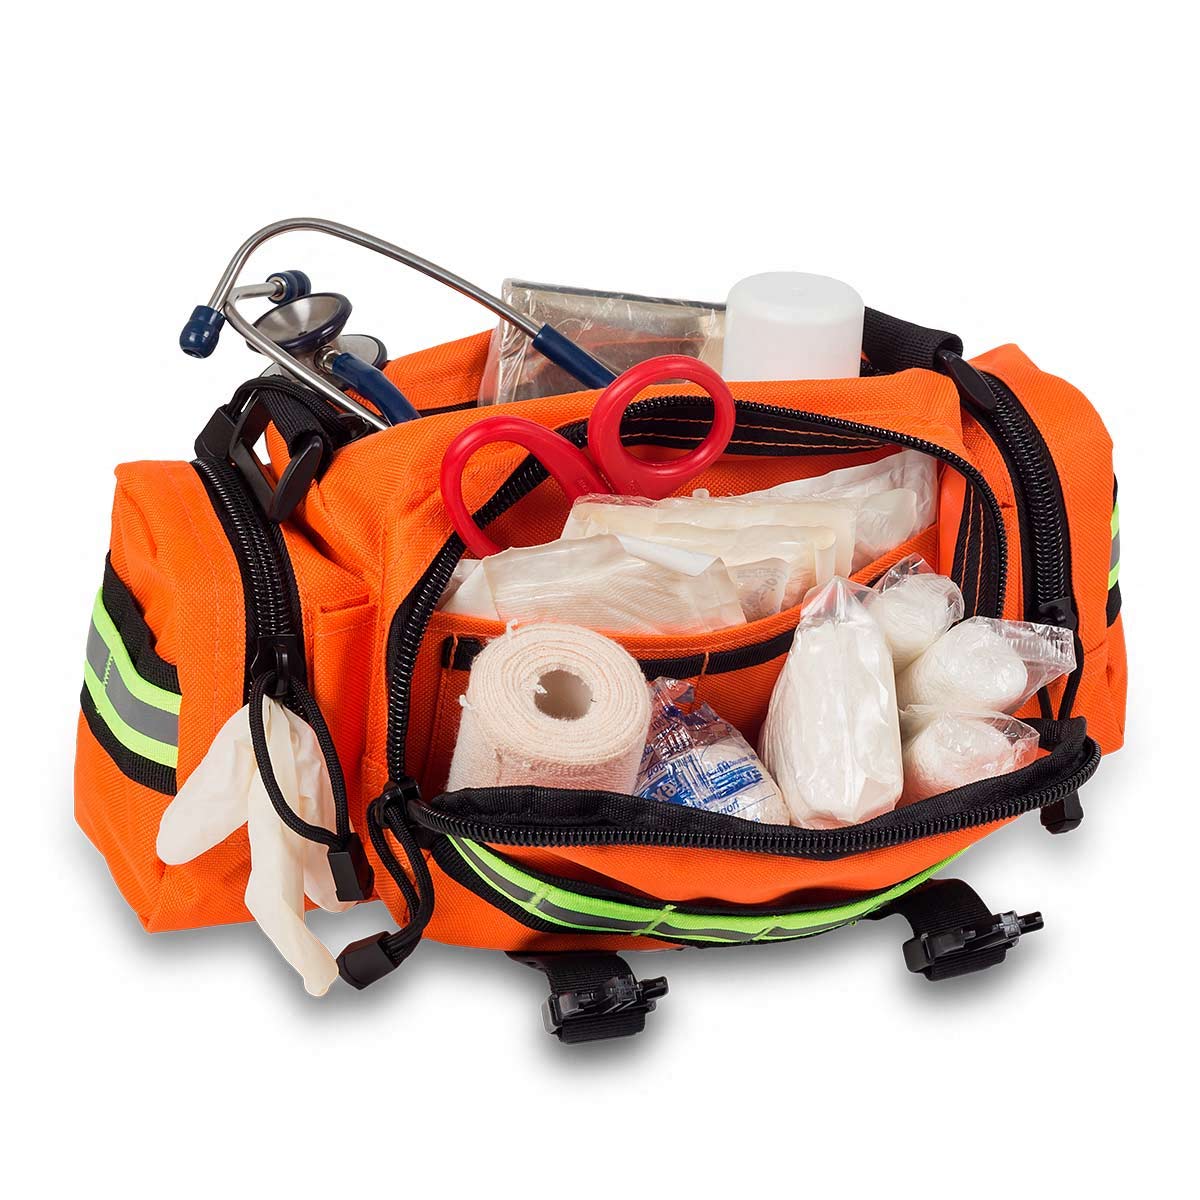 Elite Emergency's Rescue Waist Kit Bag